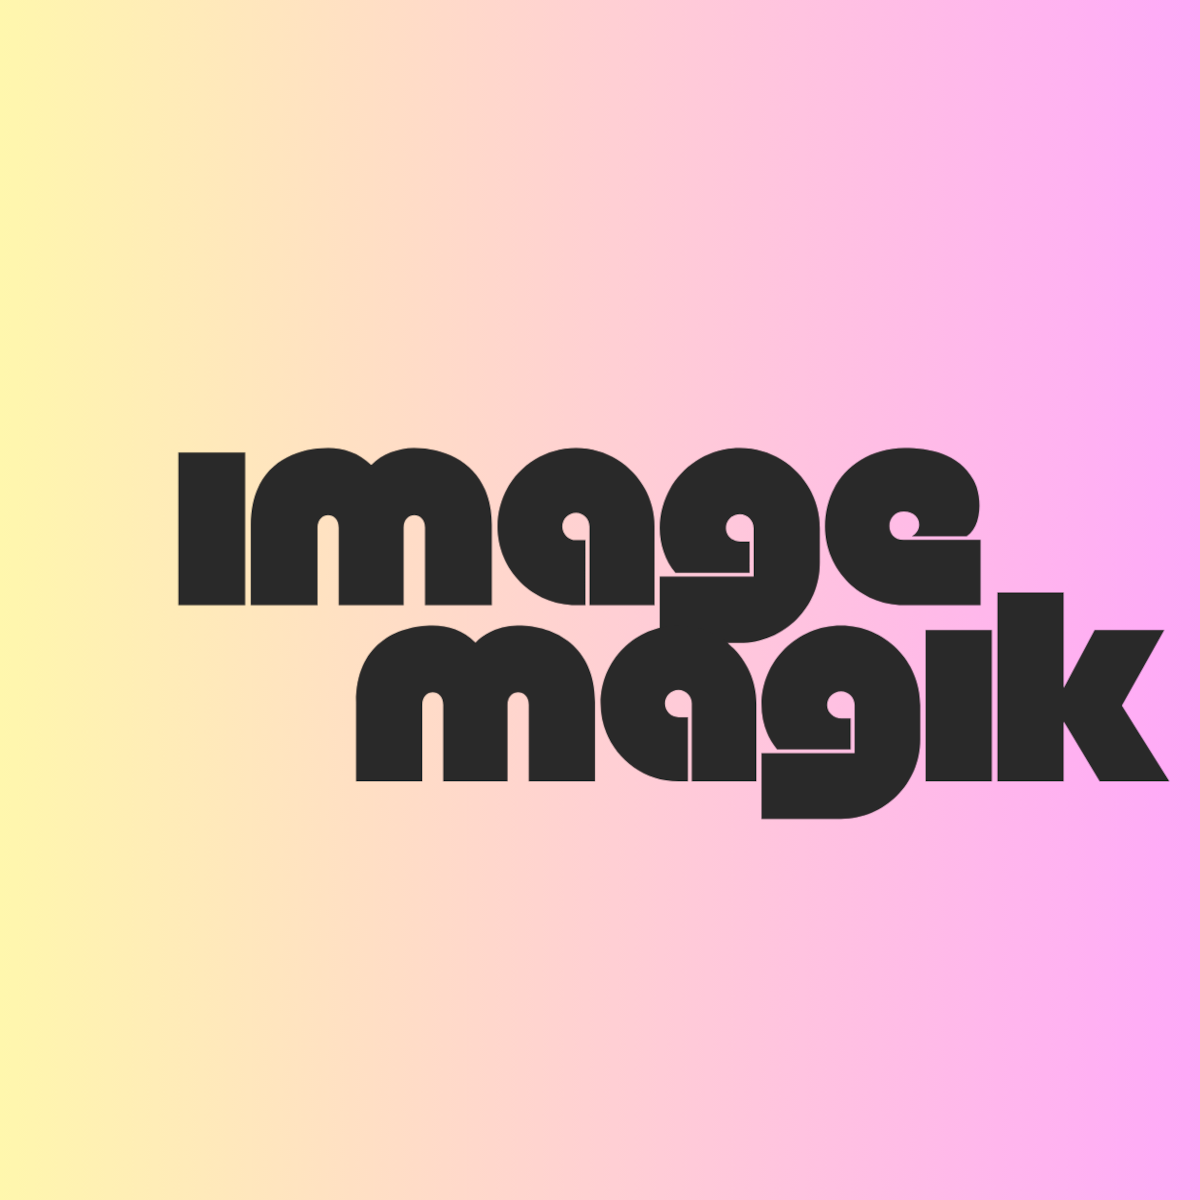 Imagemagik 60% discount